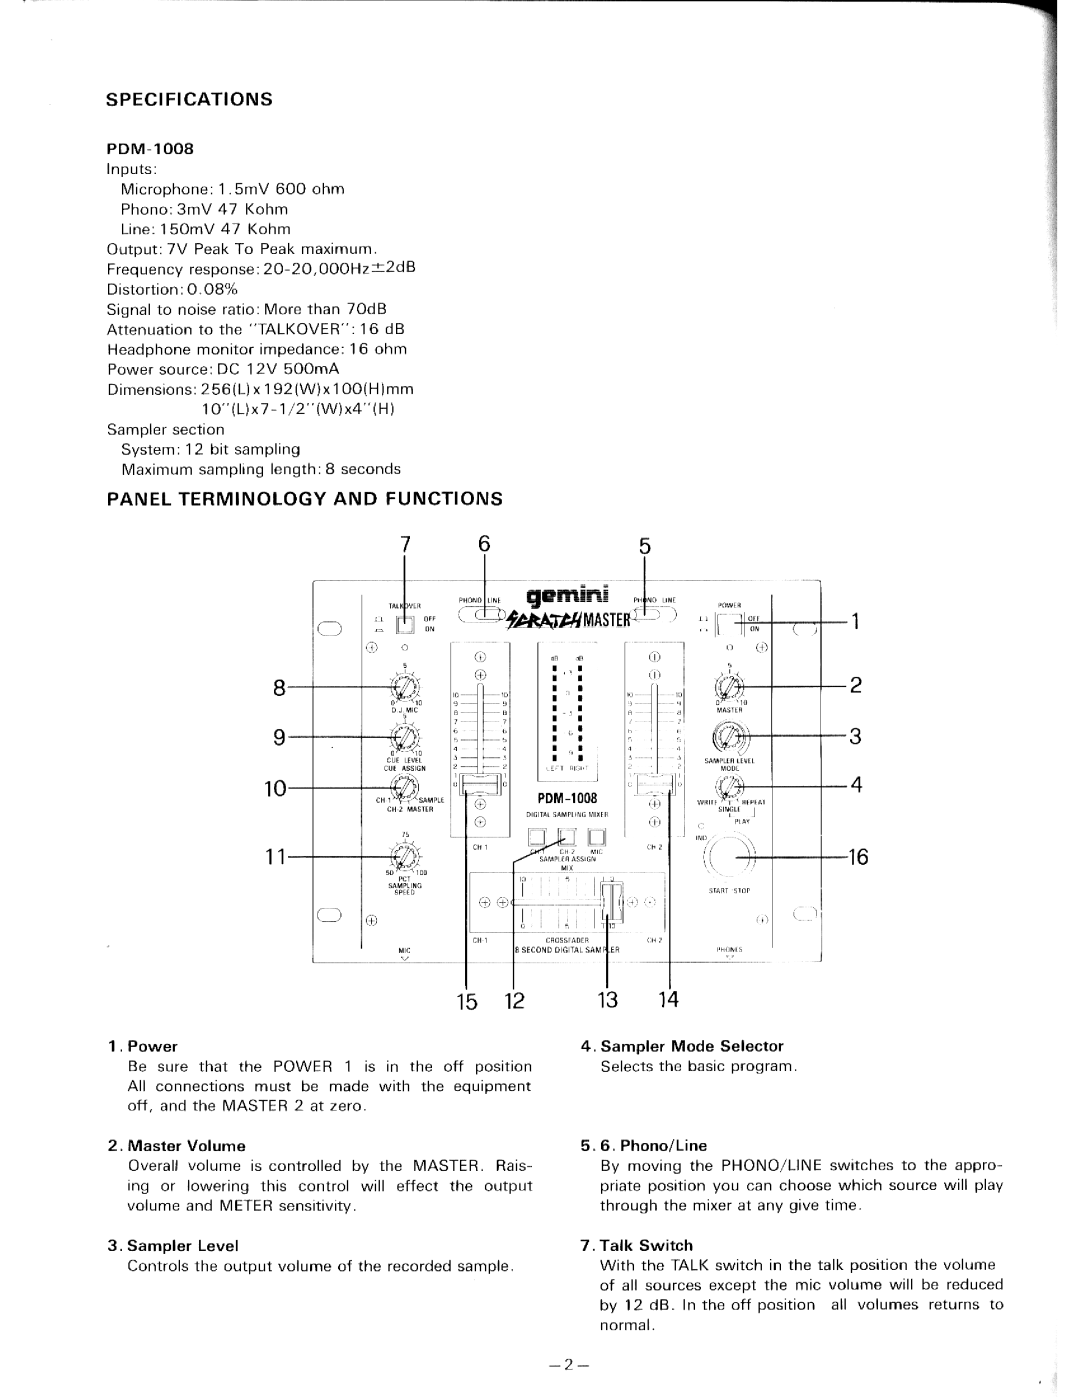 Gemini PDM-1008 manual 